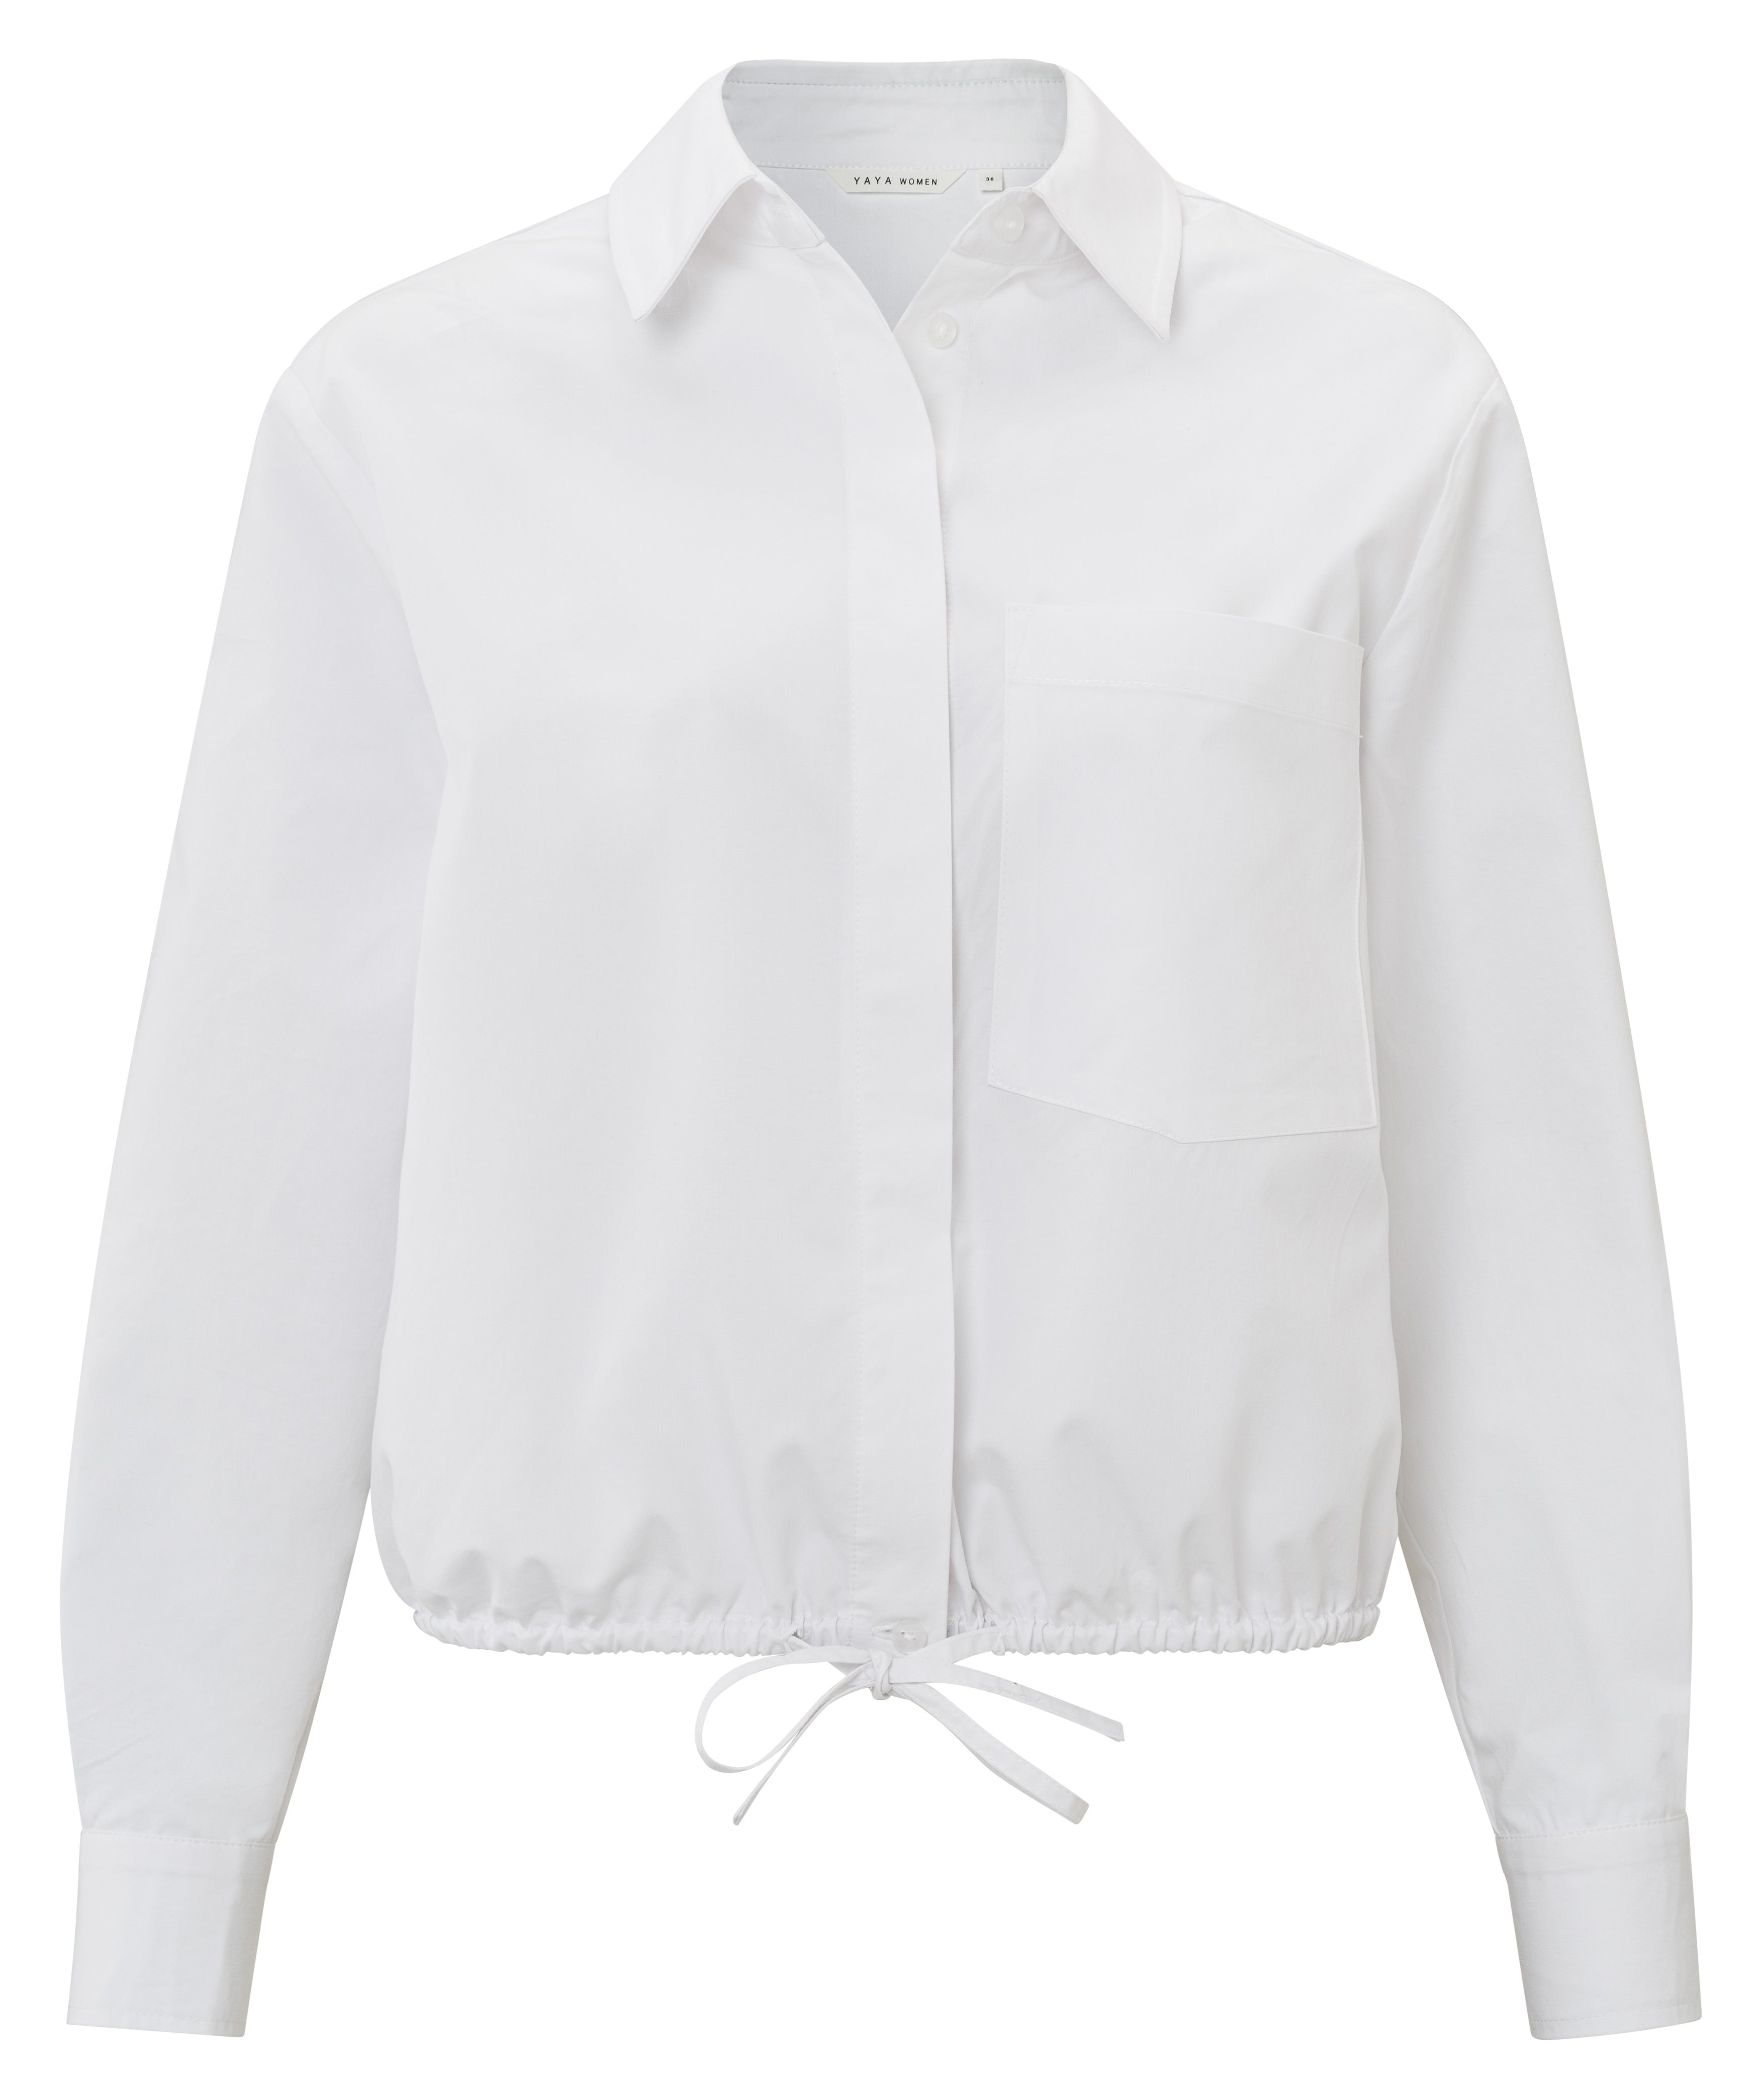 Short White Shirt with Drawstrings 201052 YAYA Pure Whitehorse